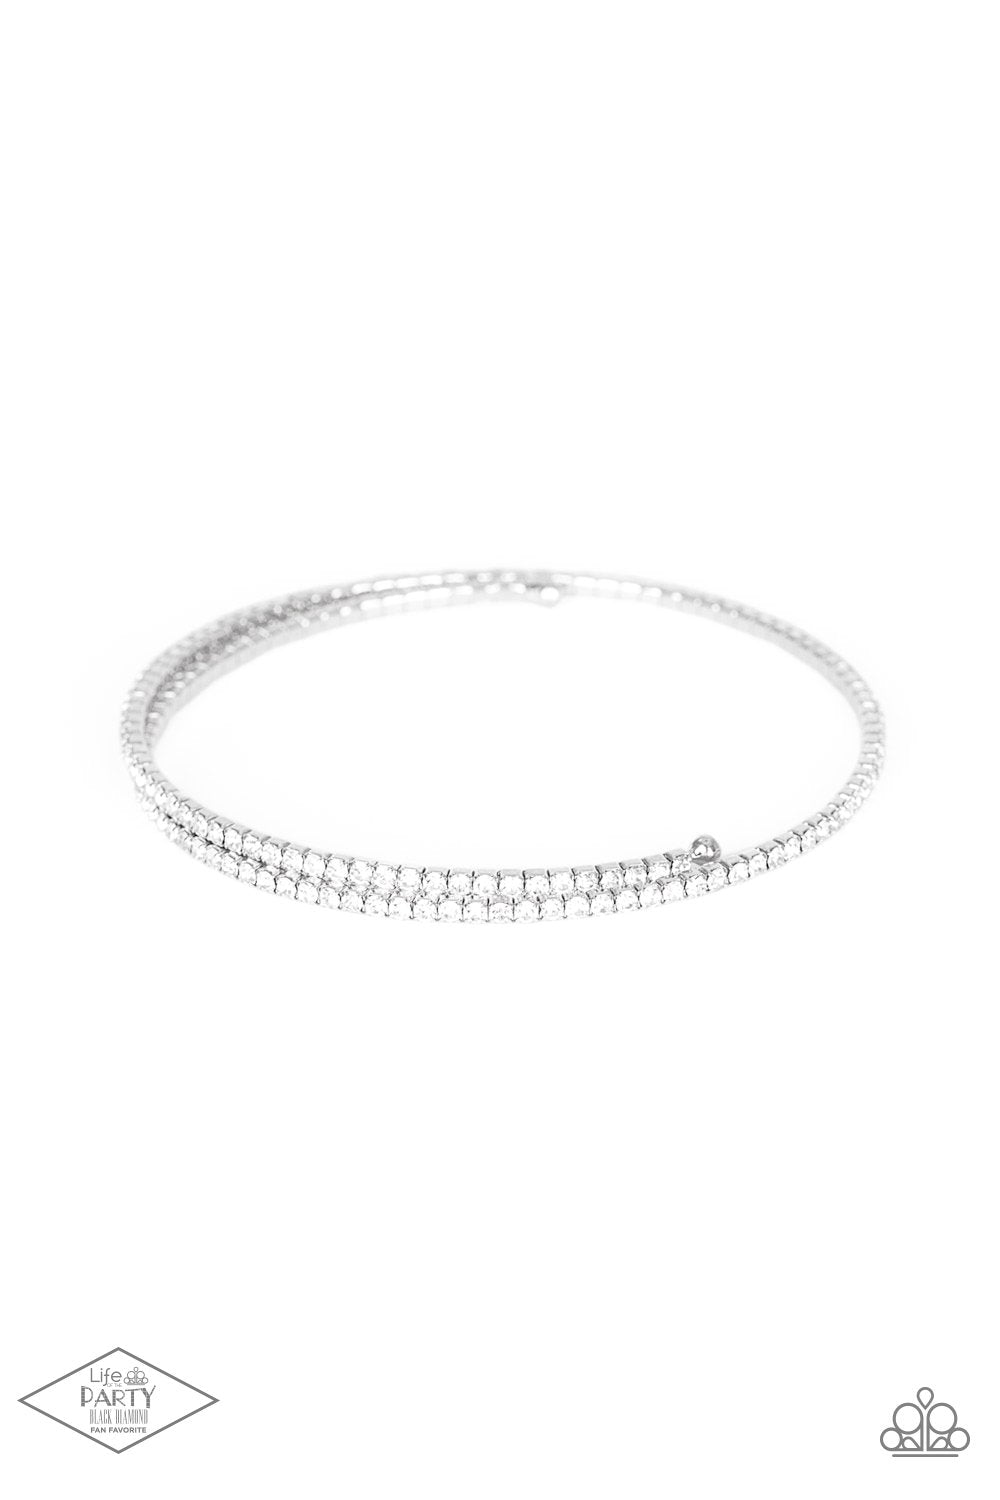 Sleek Sparkle White Rhinestone Coil Bracelet - Paparazzi Accessories- lightbox - CarasShop.com - $5 Jewelry by Cara Jewels